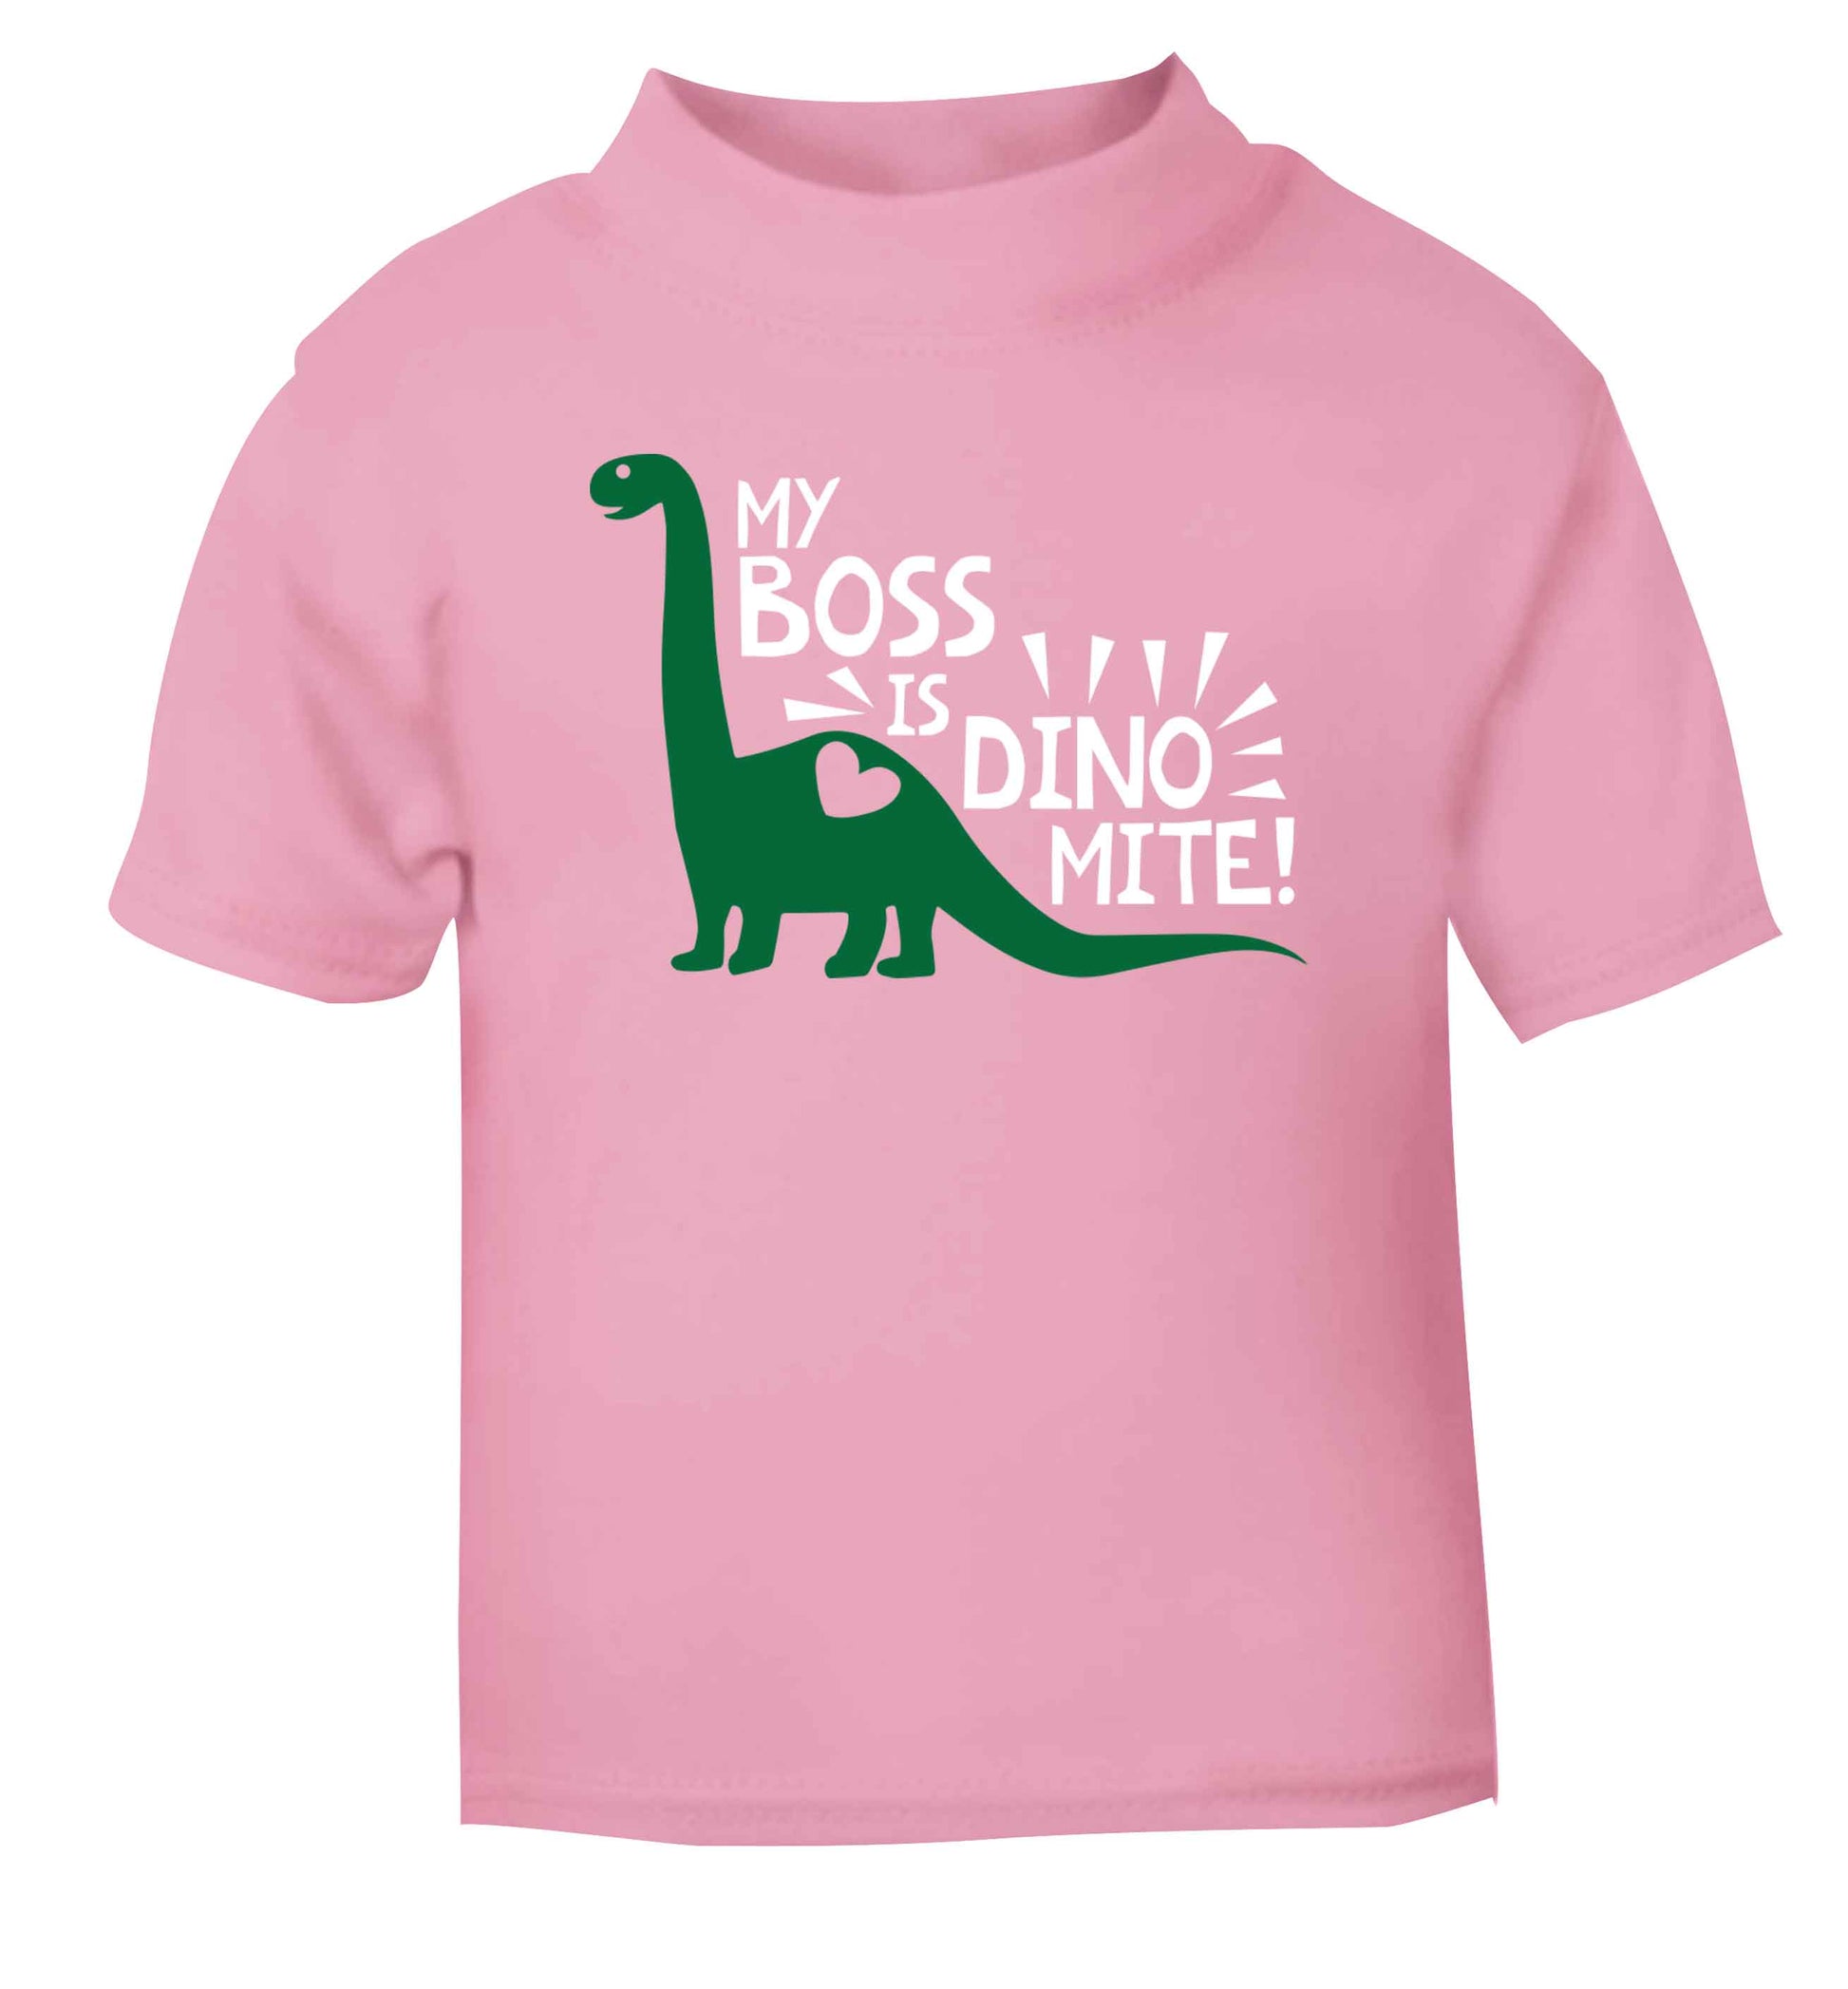 My boss is dinomite! light pink Baby Toddler Tshirt 2 Years